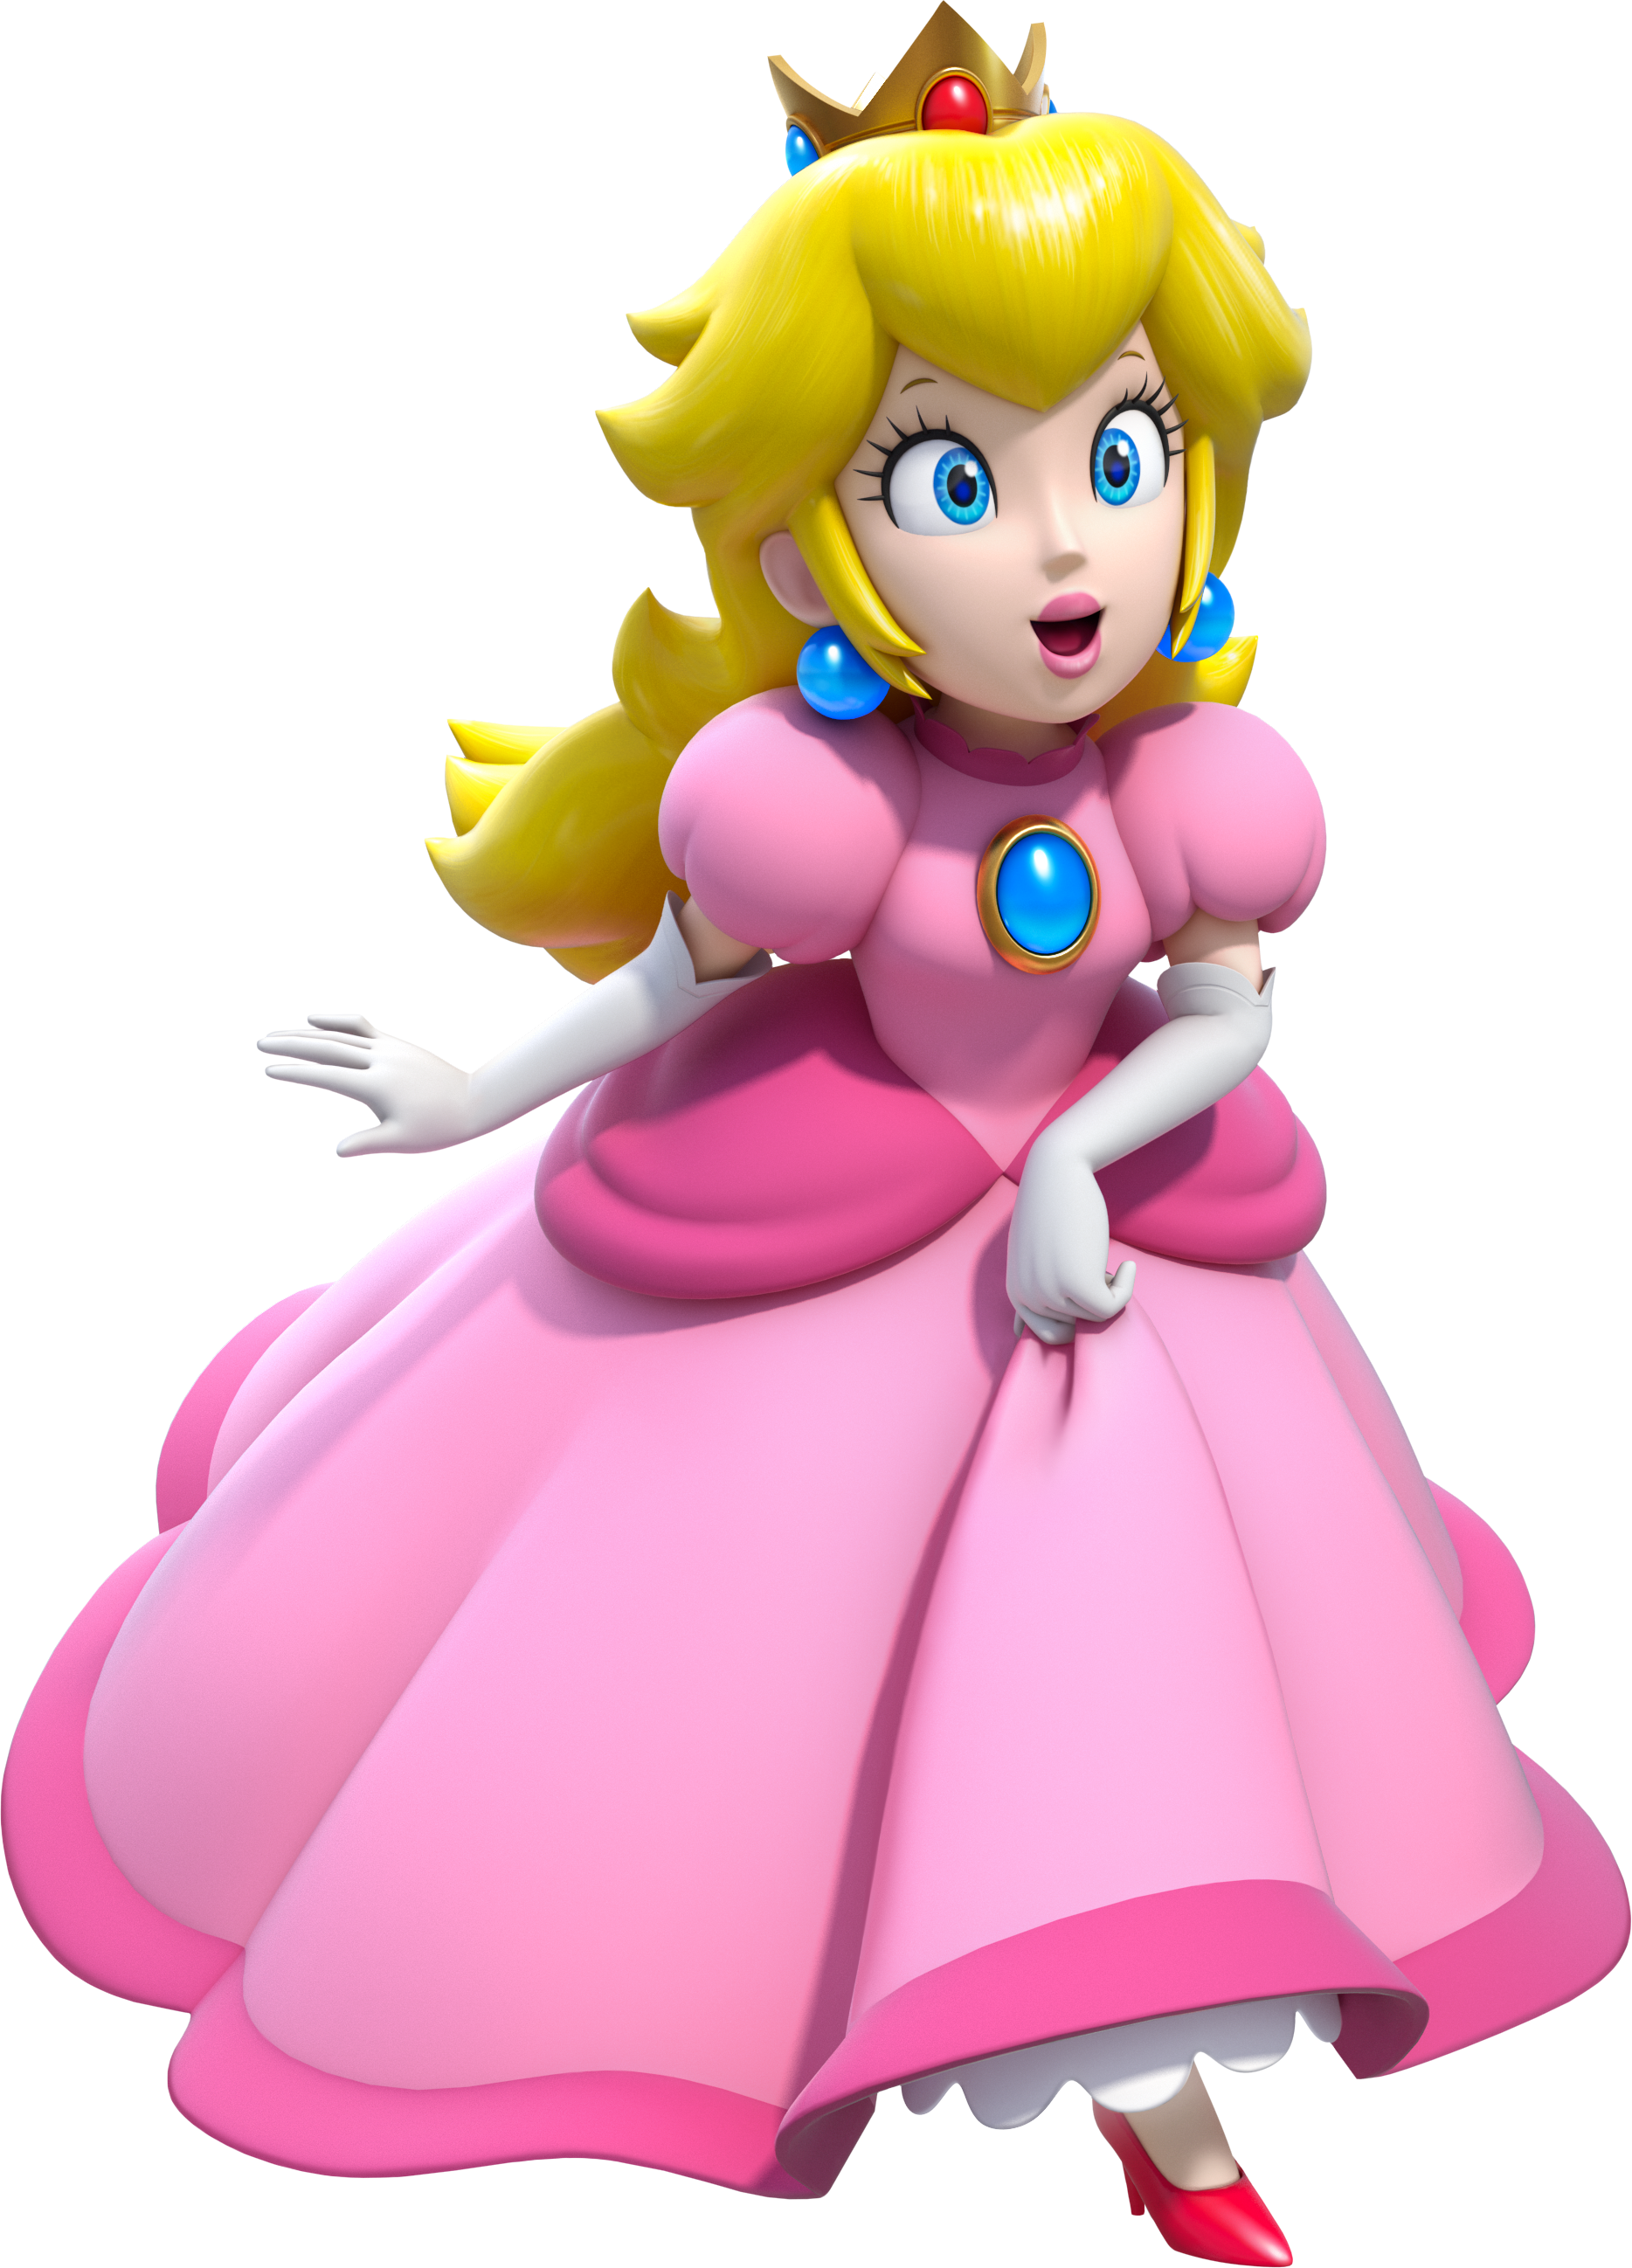 Princess_Peach_Artwork_-_Super_Mario_3D_World.png